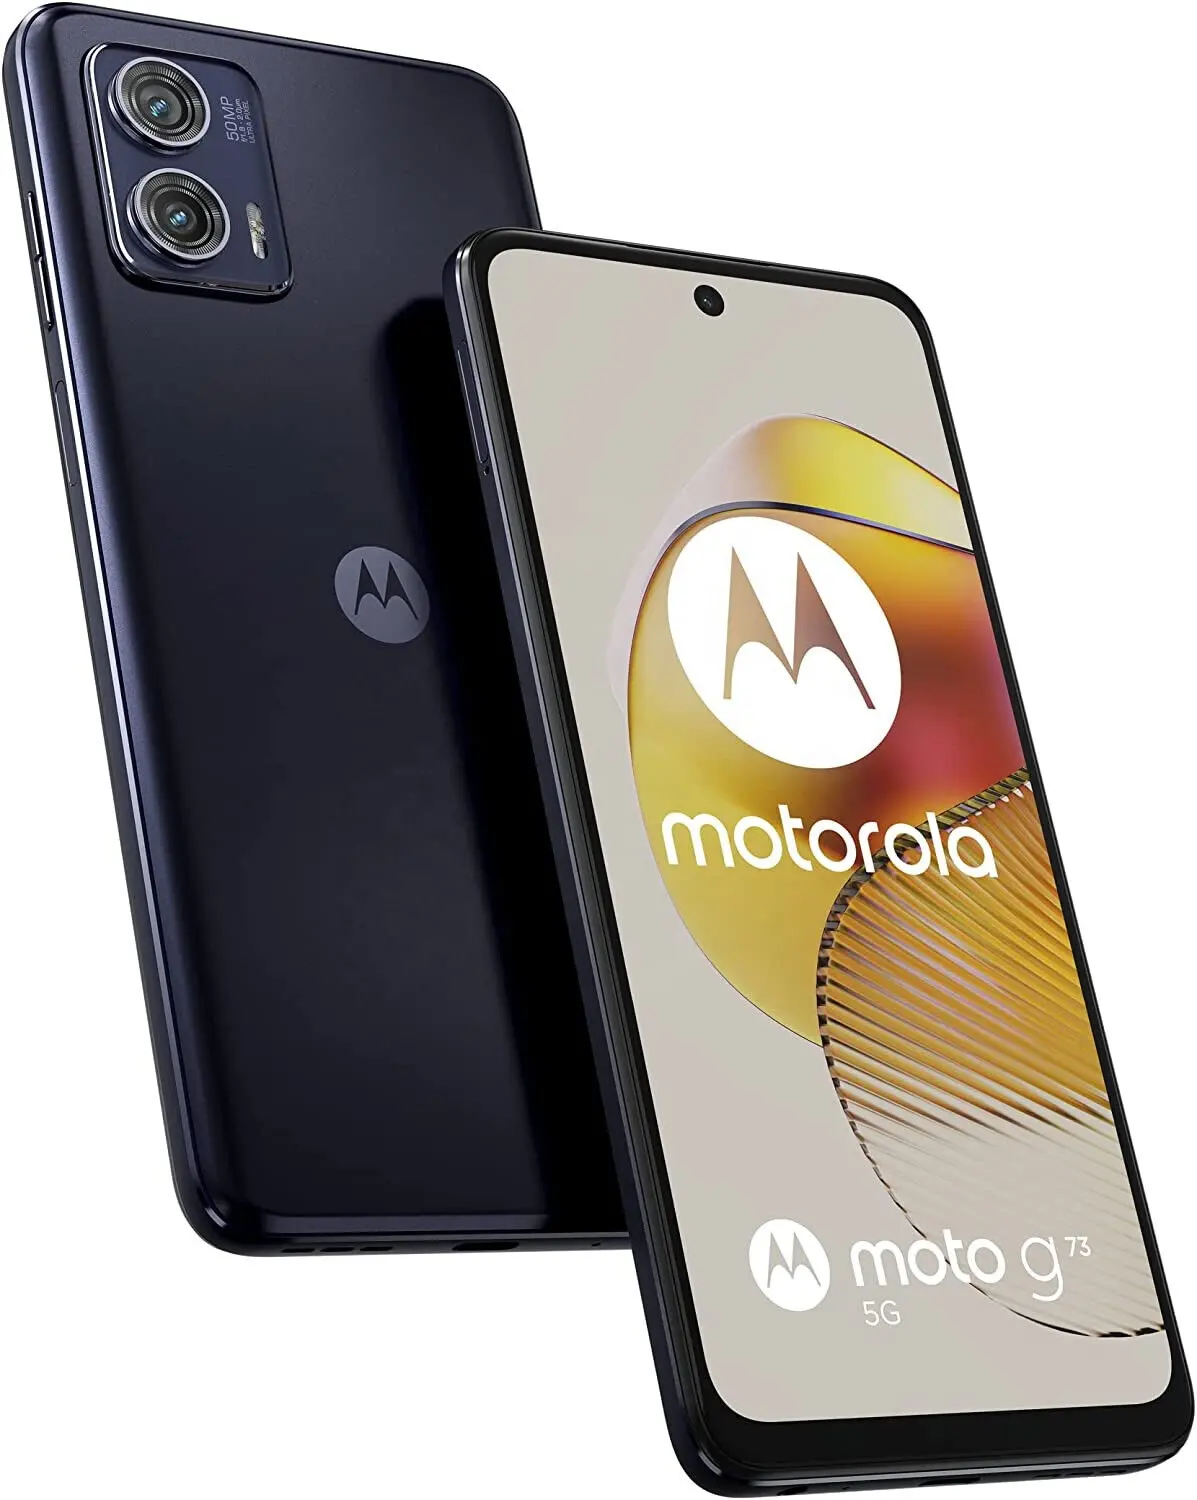 Mobile remis à neuf MOTOROLA g73 5G USCTORY DEVERROCKED DUAL SIM NFC 4GB RAM 128GB 5000mAh smart mobile version mondiale